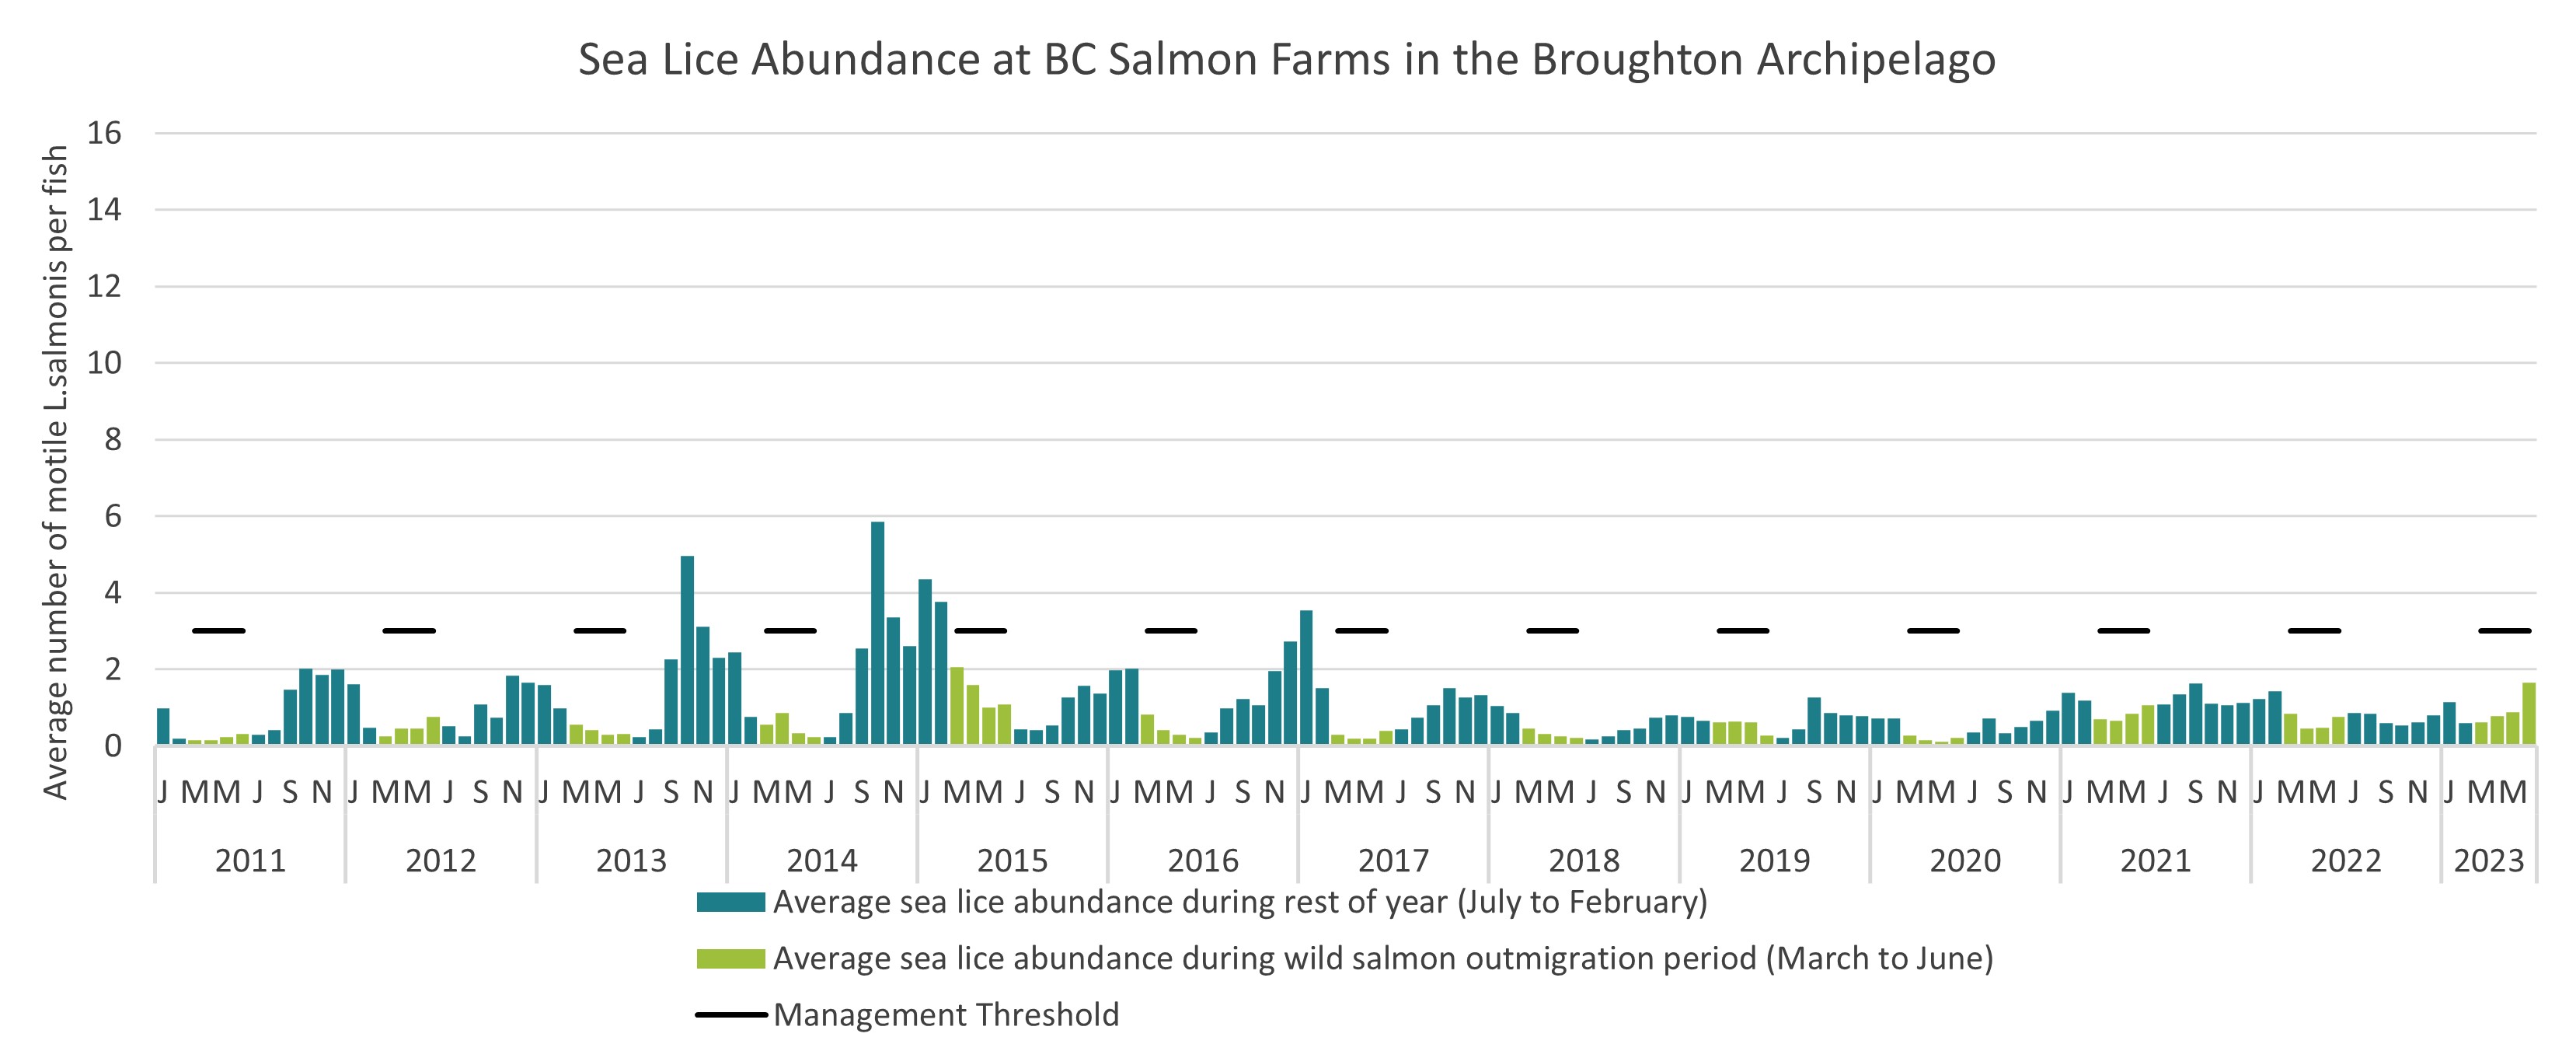 Sea Lice Abundance at BC Salmon Farms in the Broughton Archipelago, 2011 to 2023